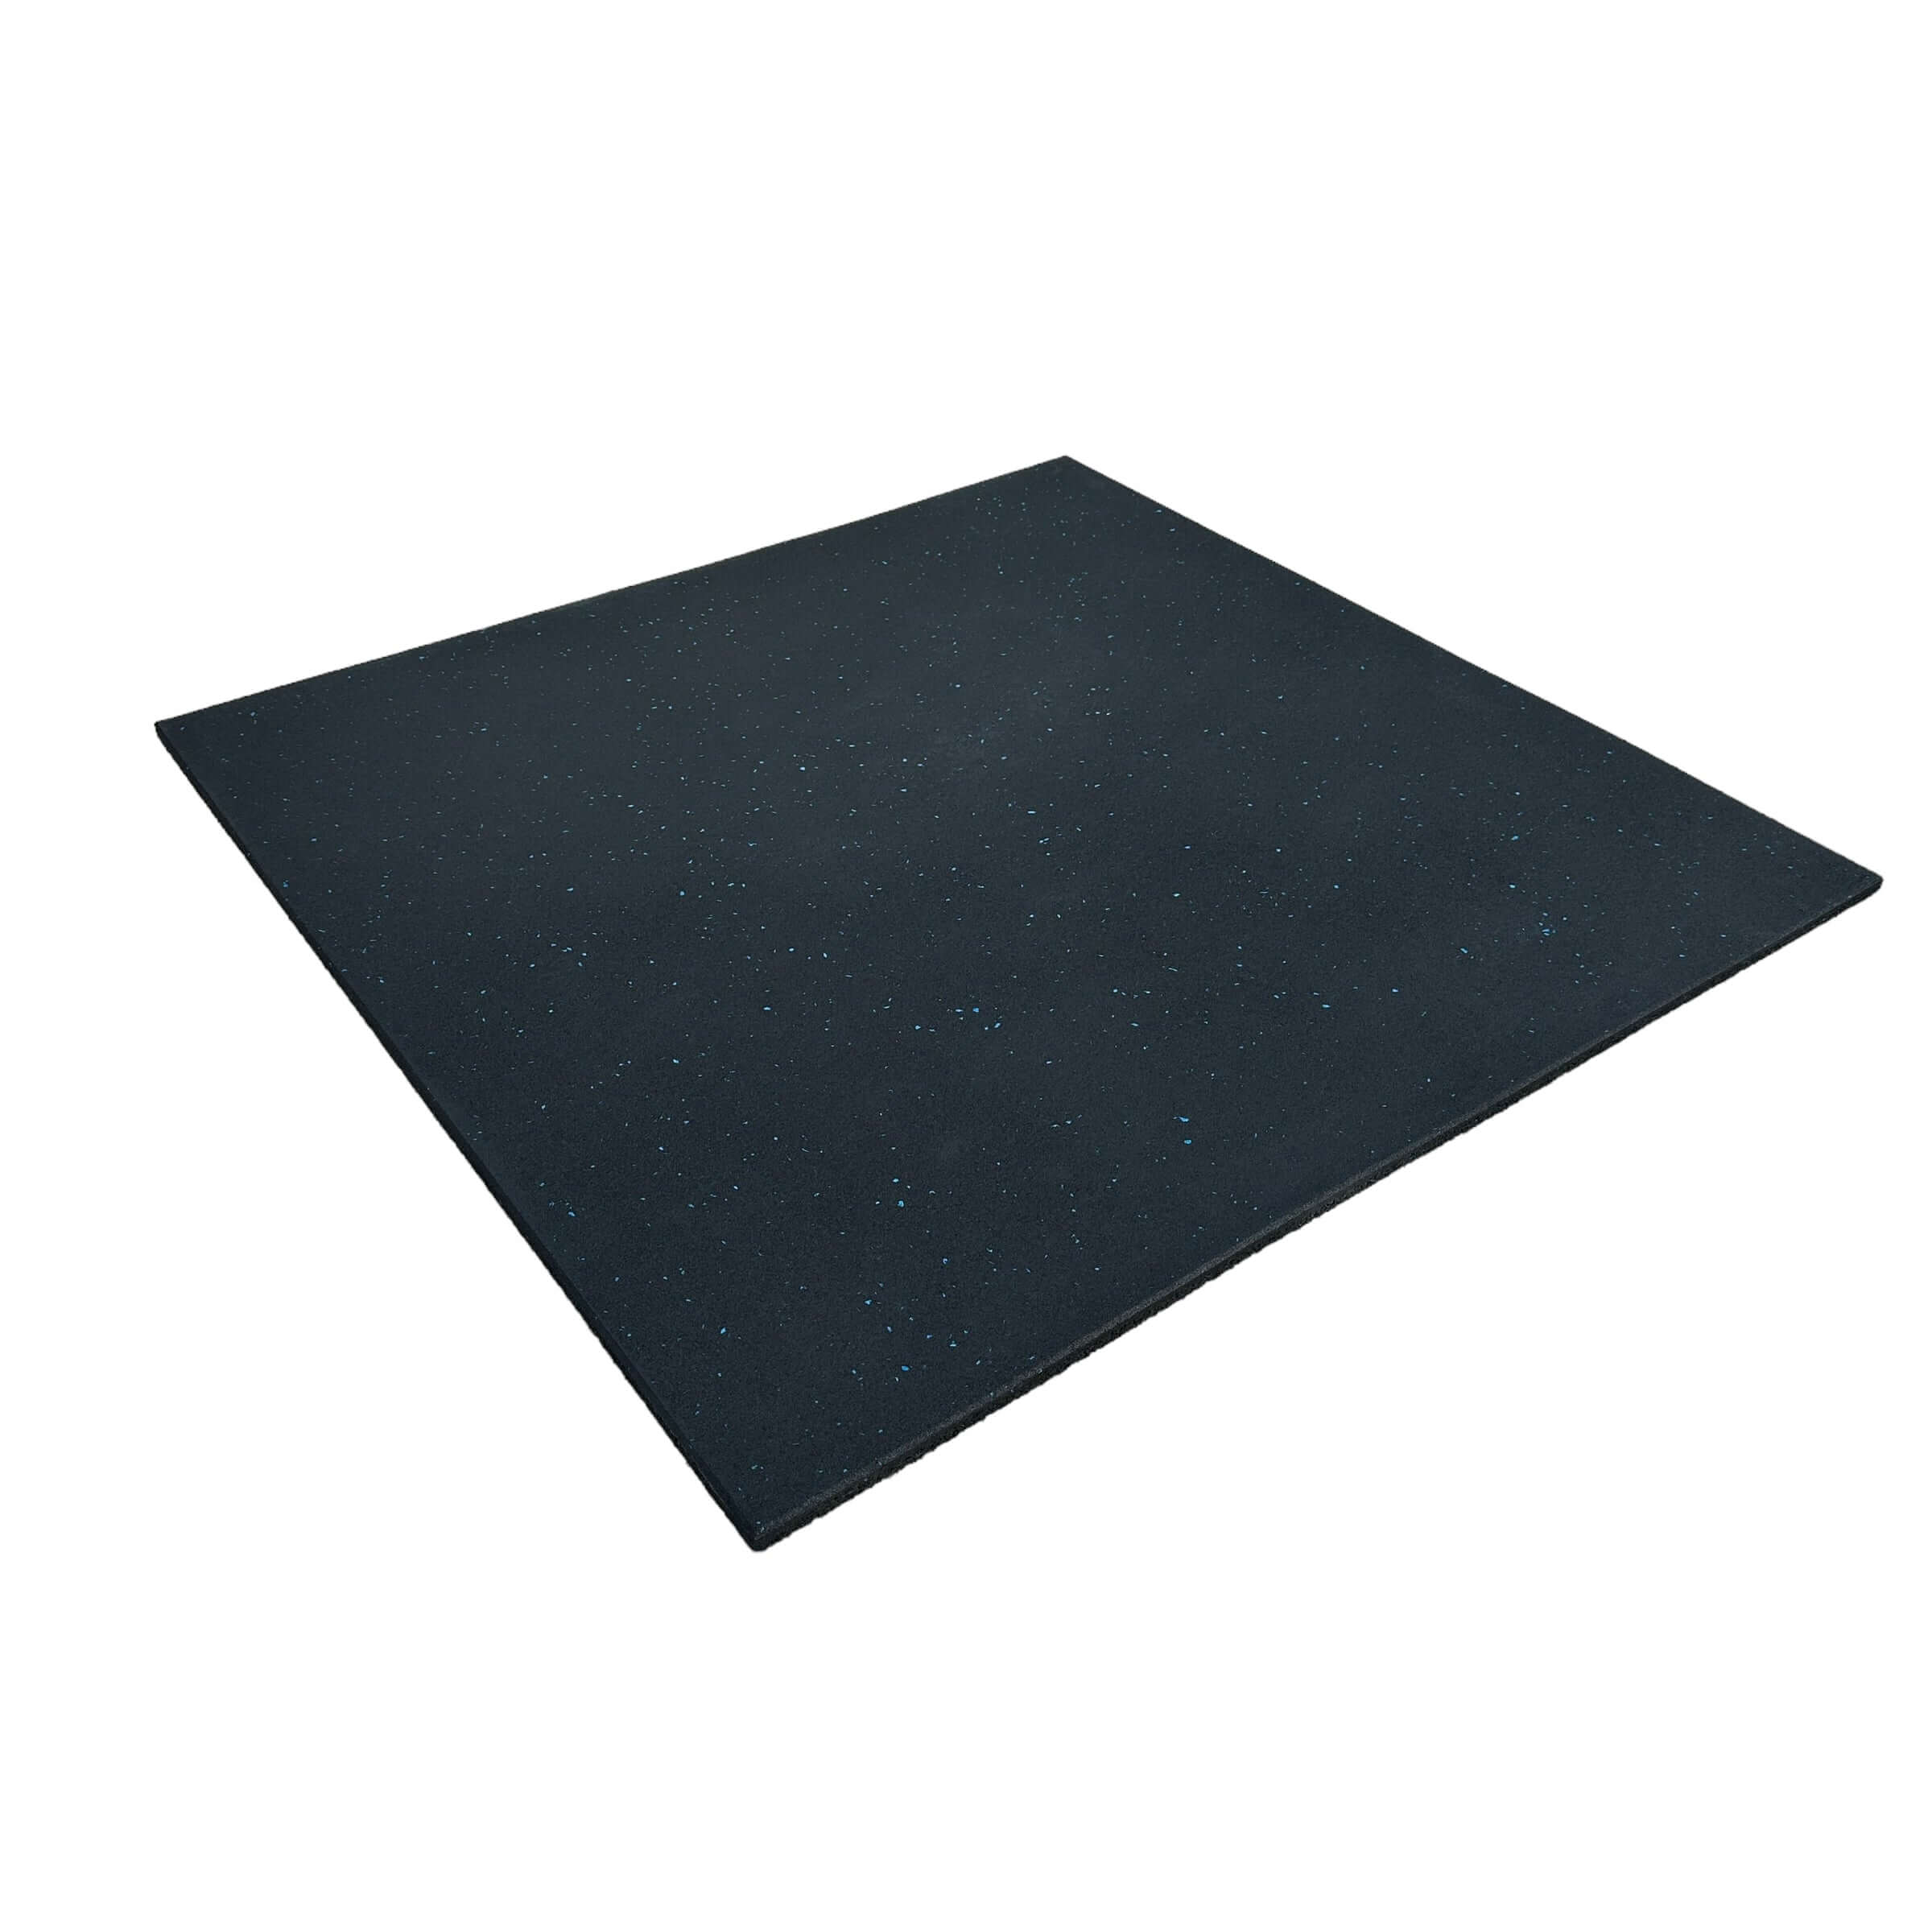 100 Pack 15mm BLACK with BLUE Fleck Rubber Gym Flooring Dense Tile Mat 1m x 1m | INSOURCE